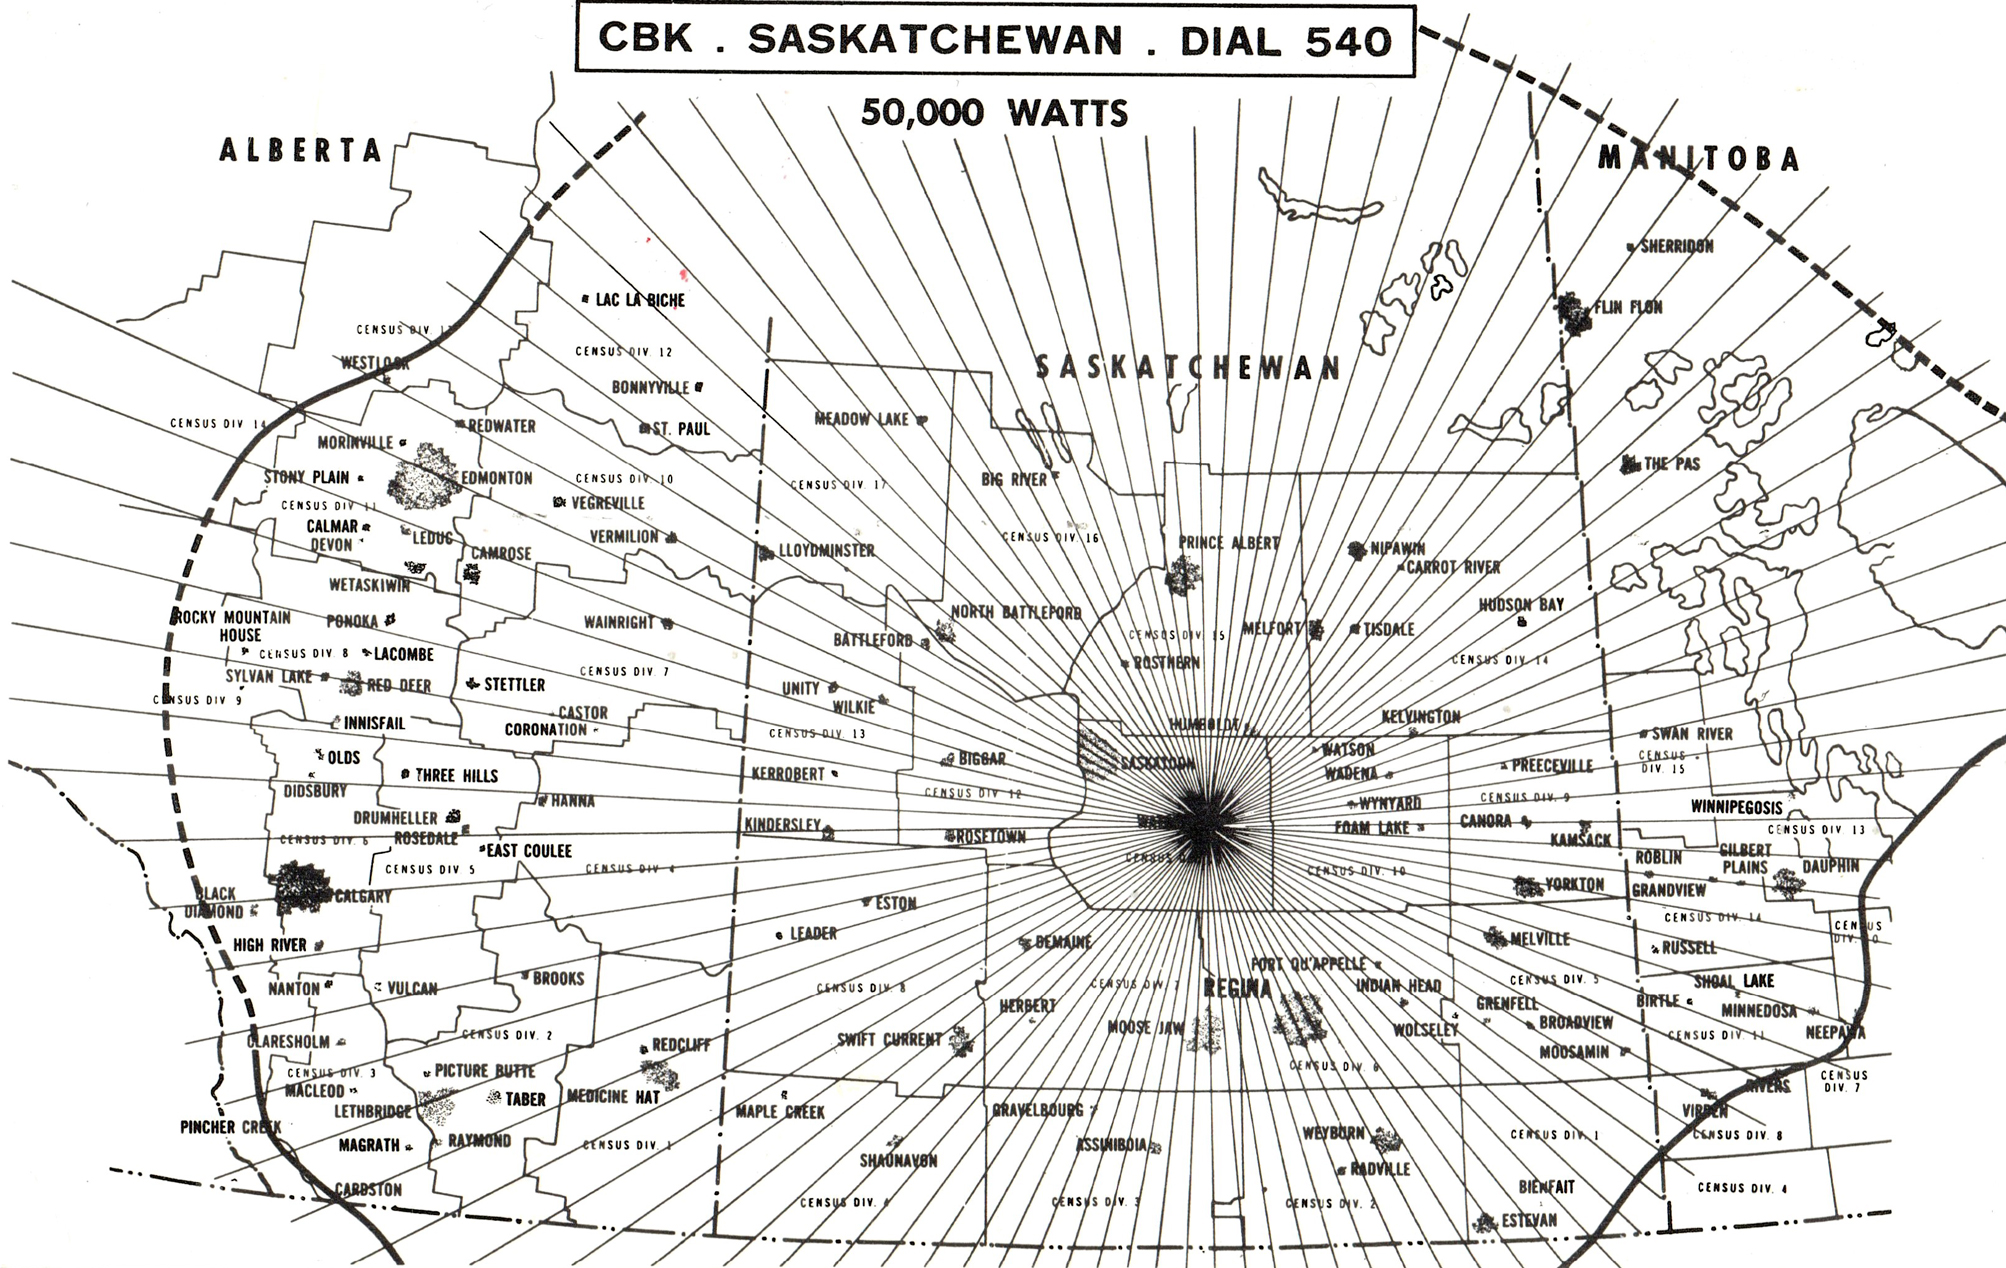 CBK Radio 540 Regina, Saskatchewan